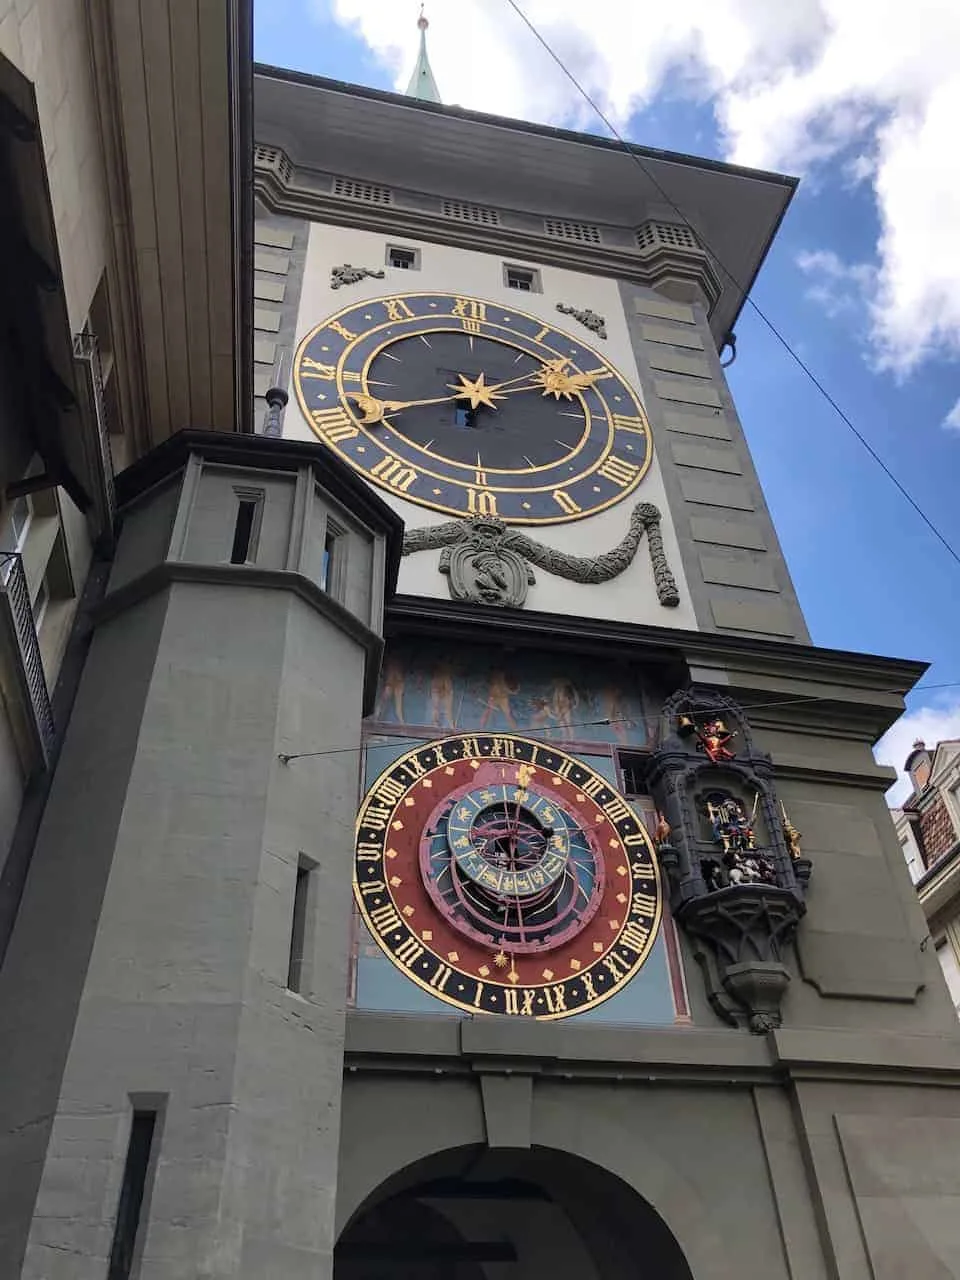 Zytalogge Bern Clock Tower